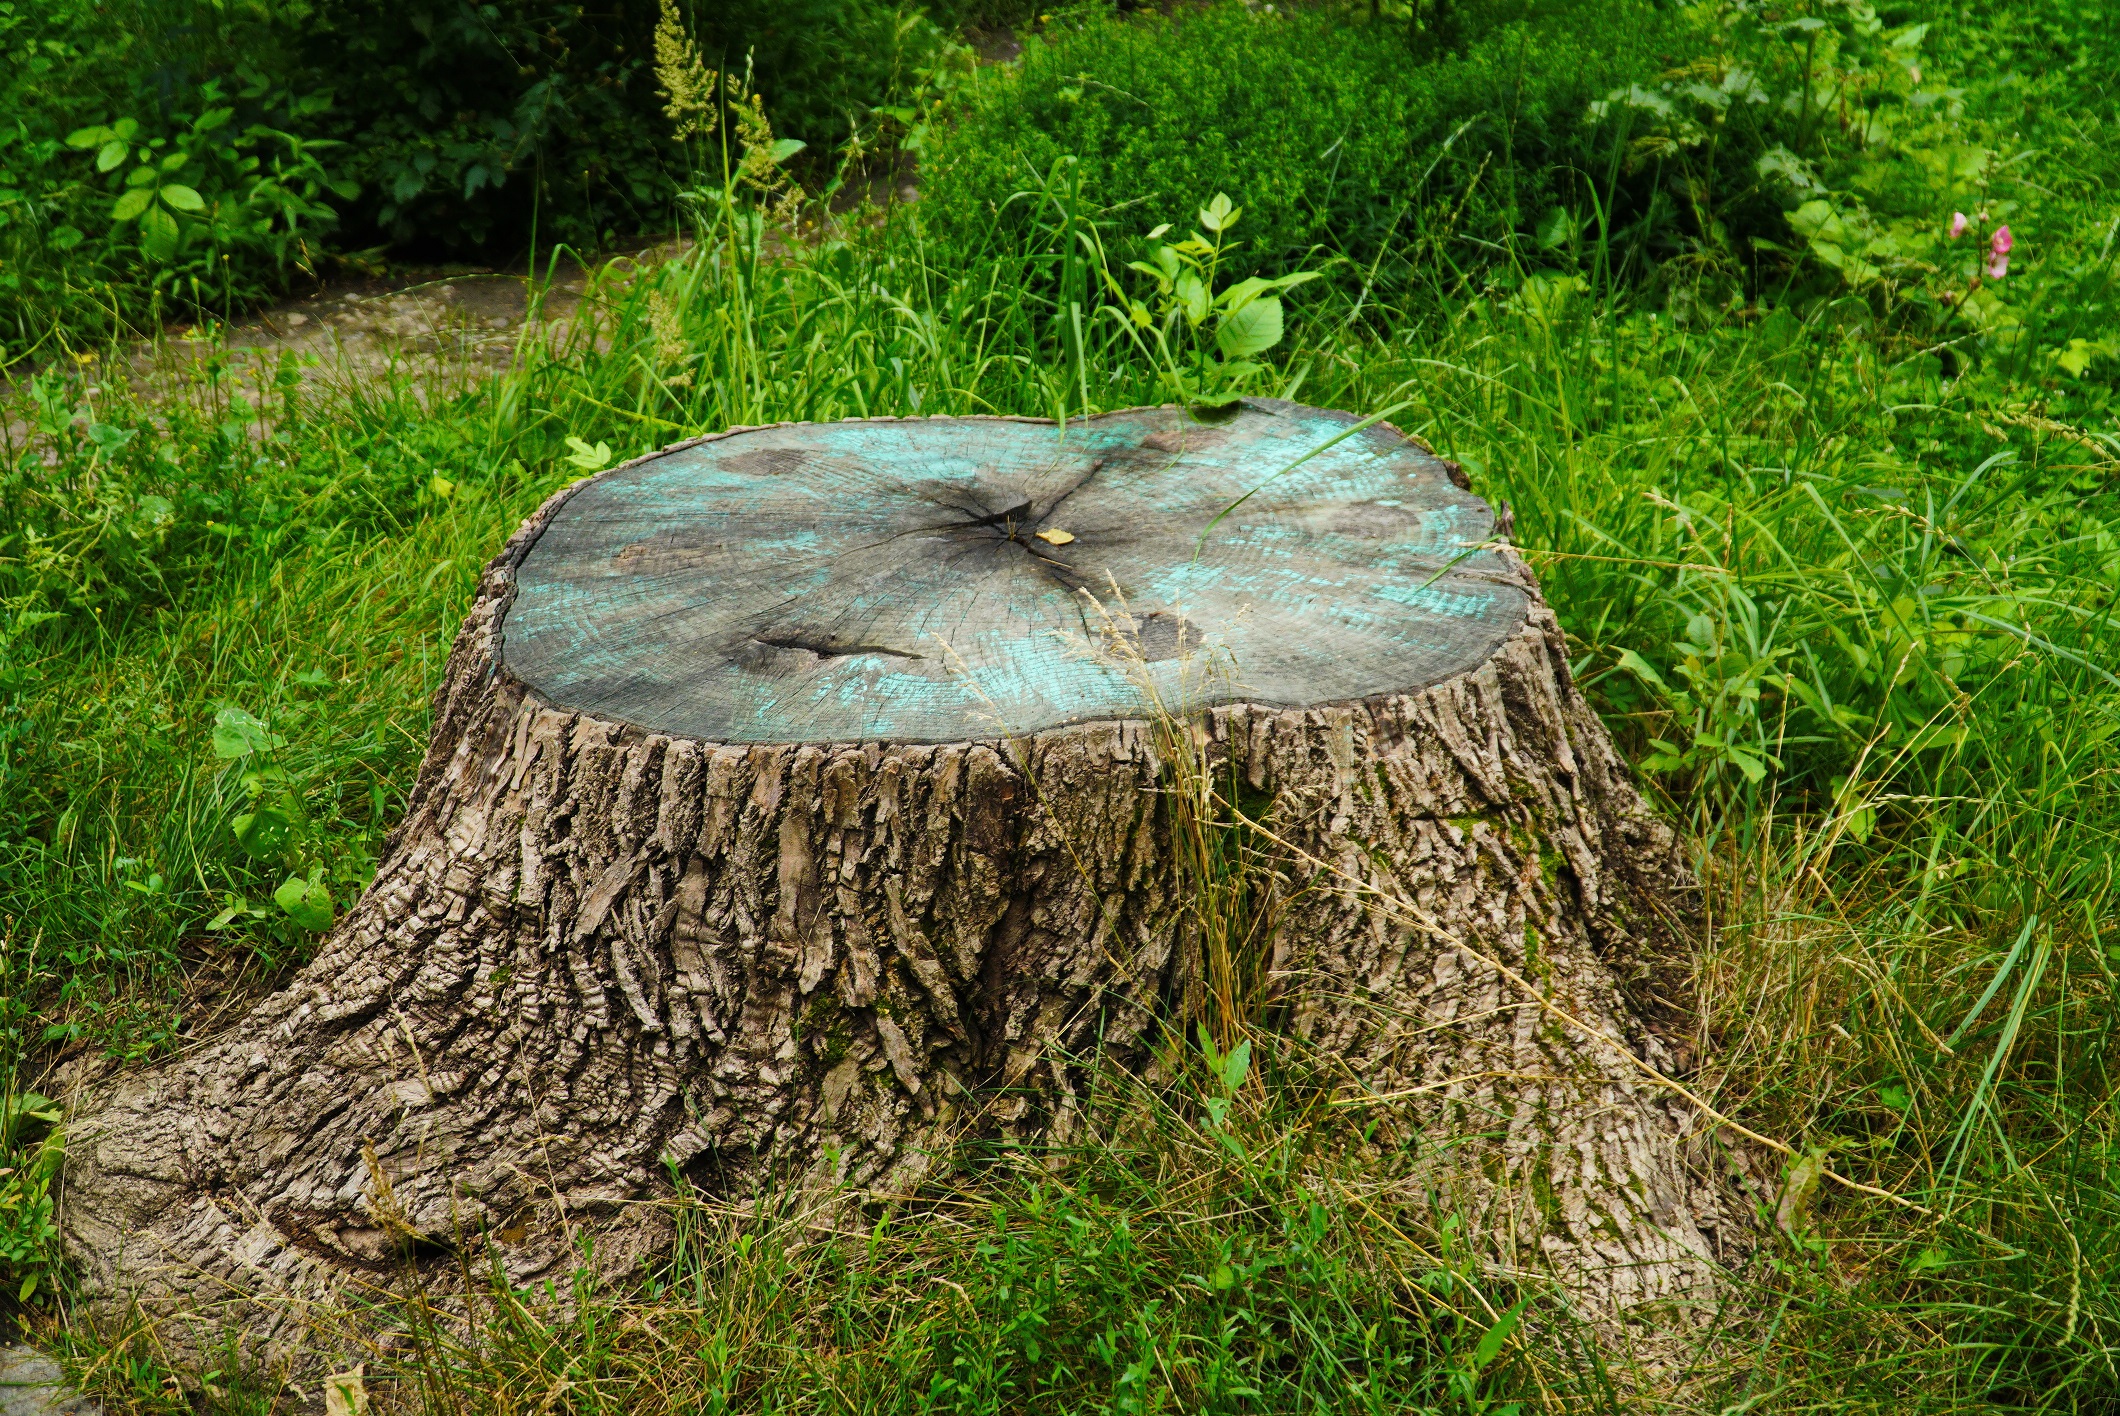 A close up photo of a tree stump